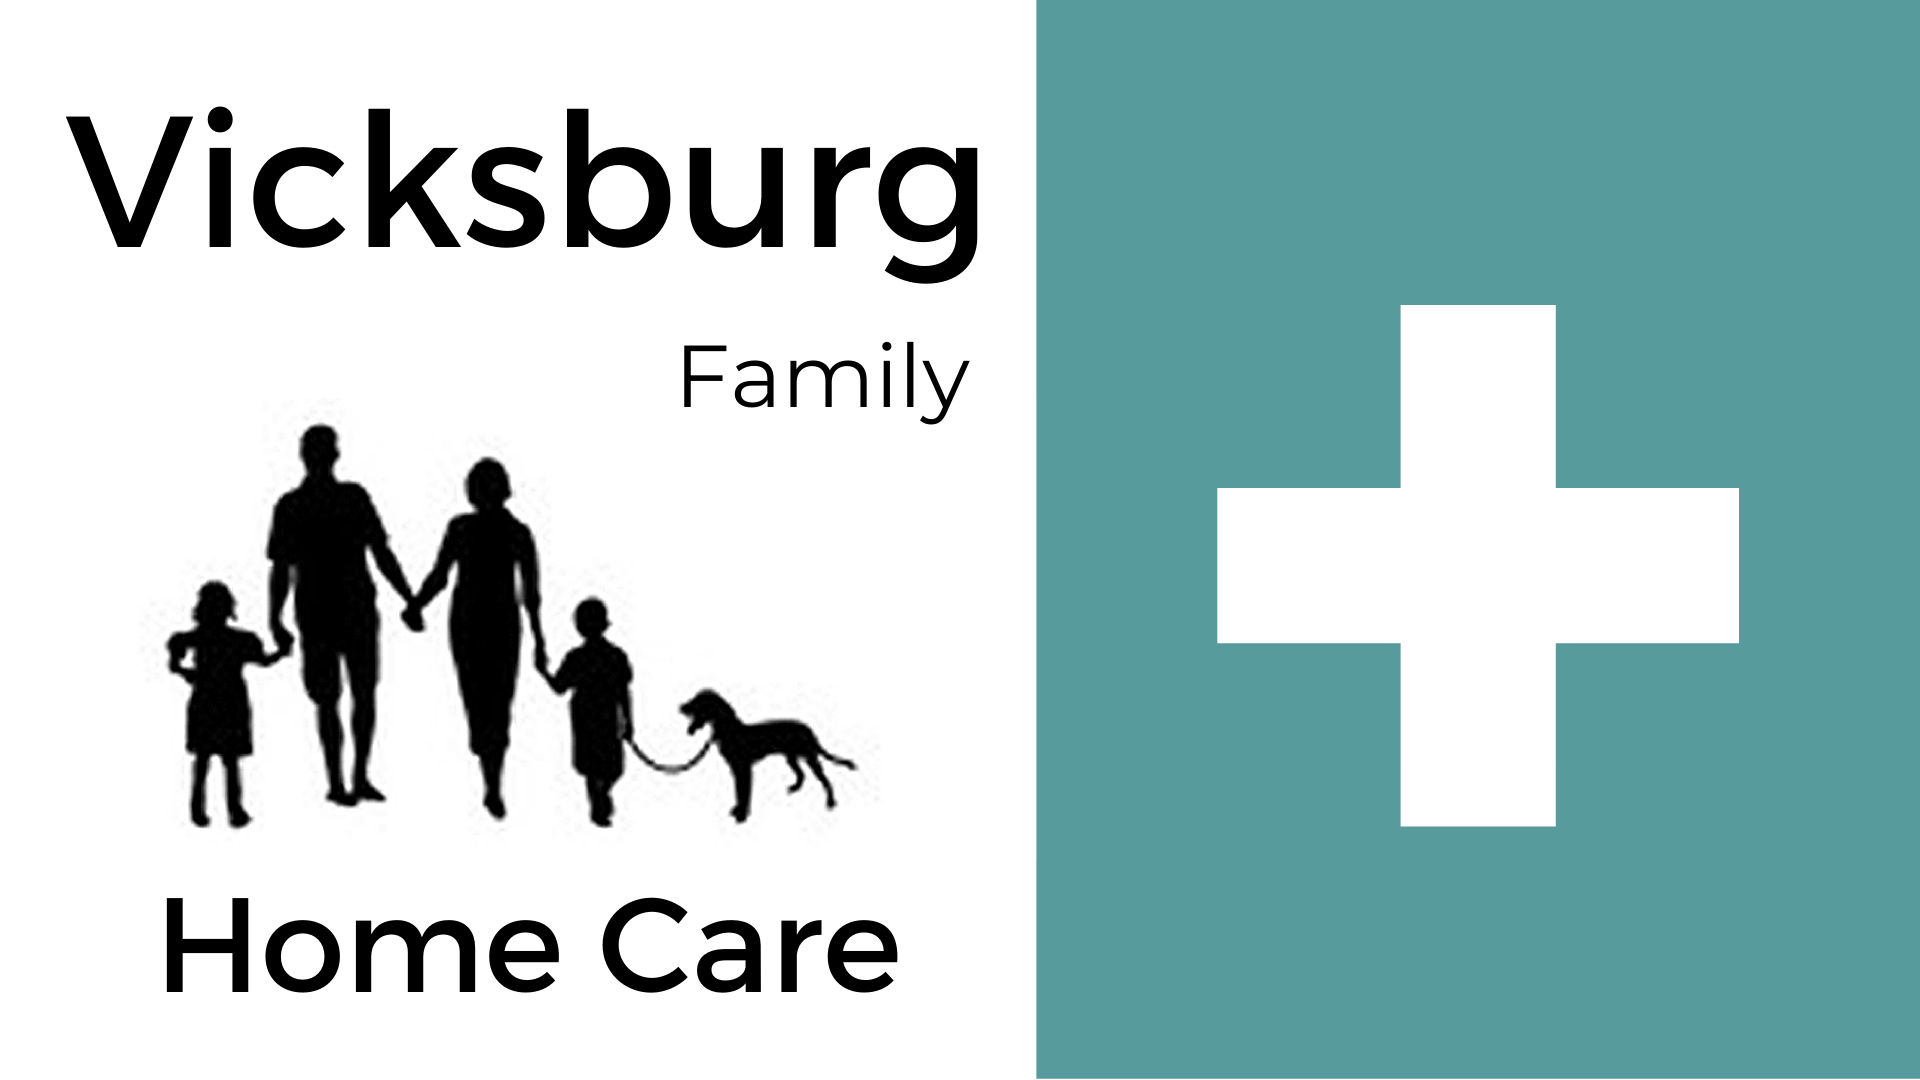 Vicksburg Family Home Care 2